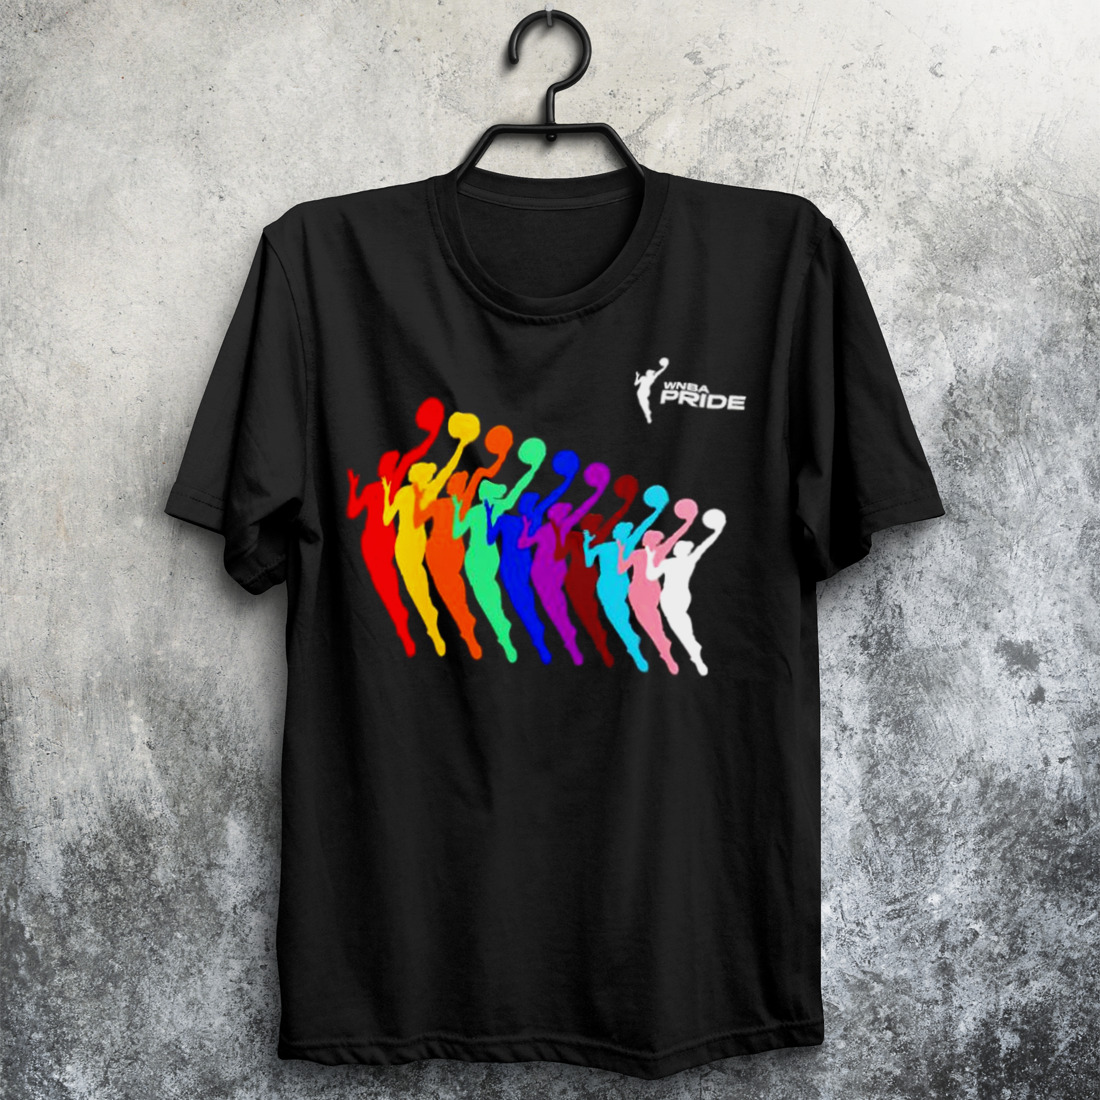 WNBA City Pride T-shirt